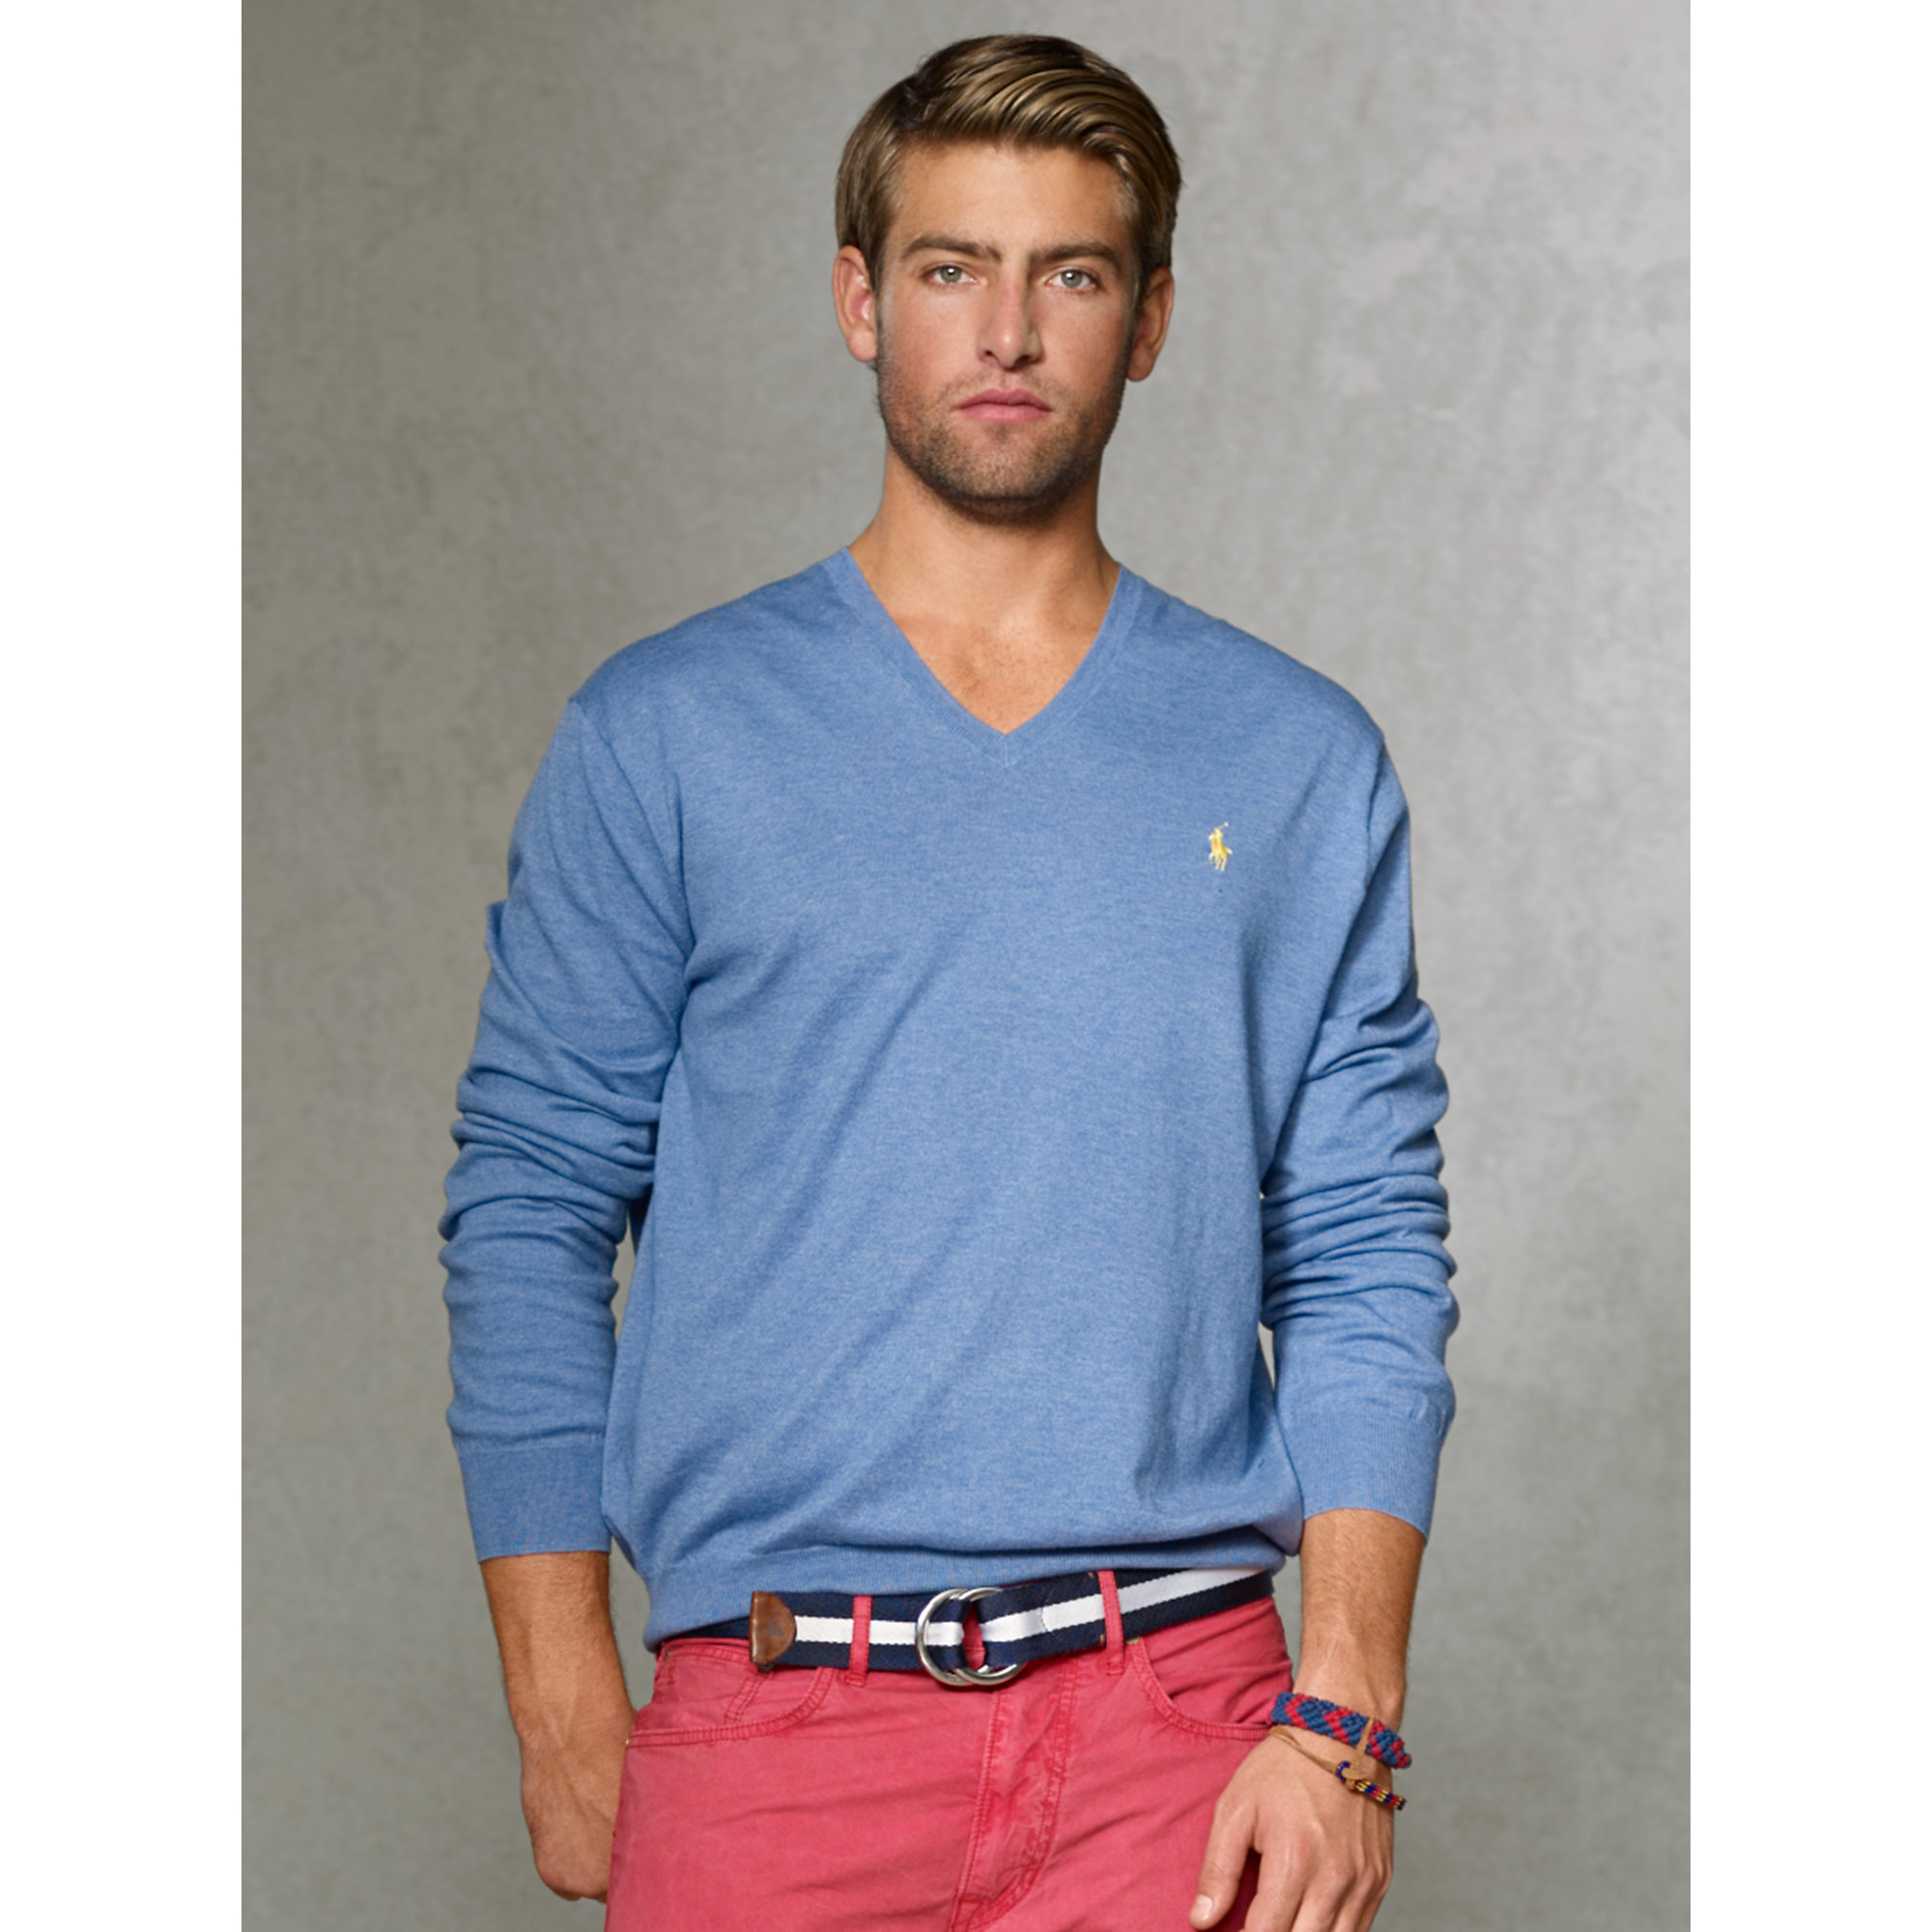 Lyst - Polo ralph lauren Pima Cotton V-Neck Sweater in Blue for Men